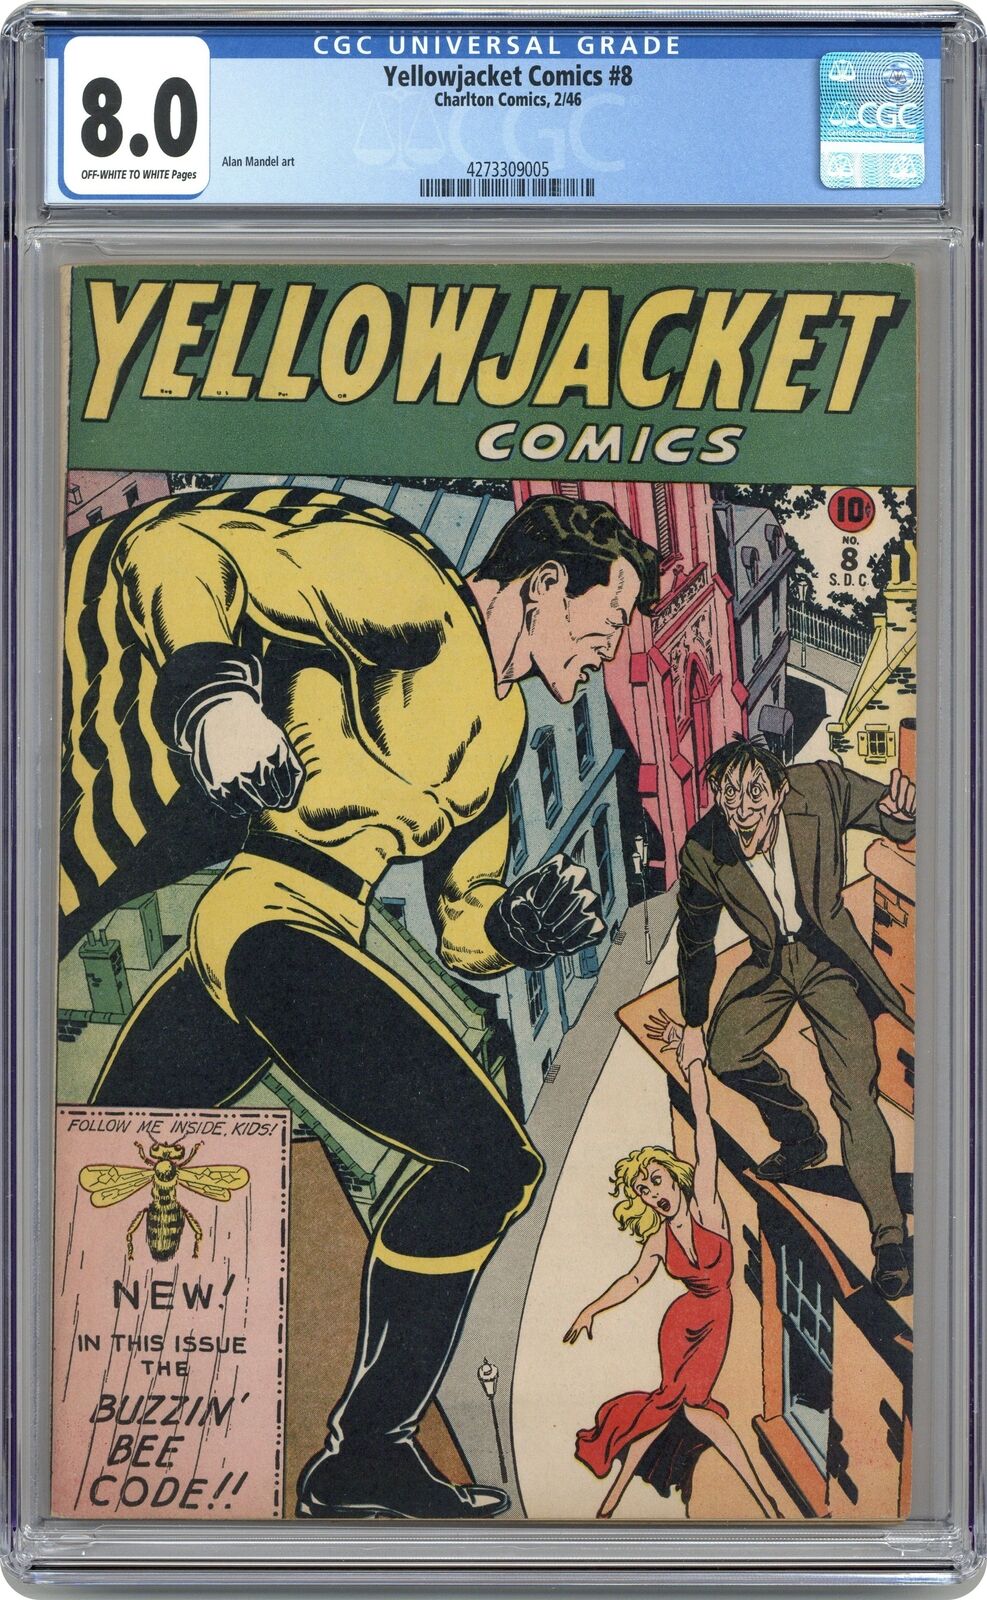 Yellowjacket Comics #8 CGC 8.0 1946 4273309005